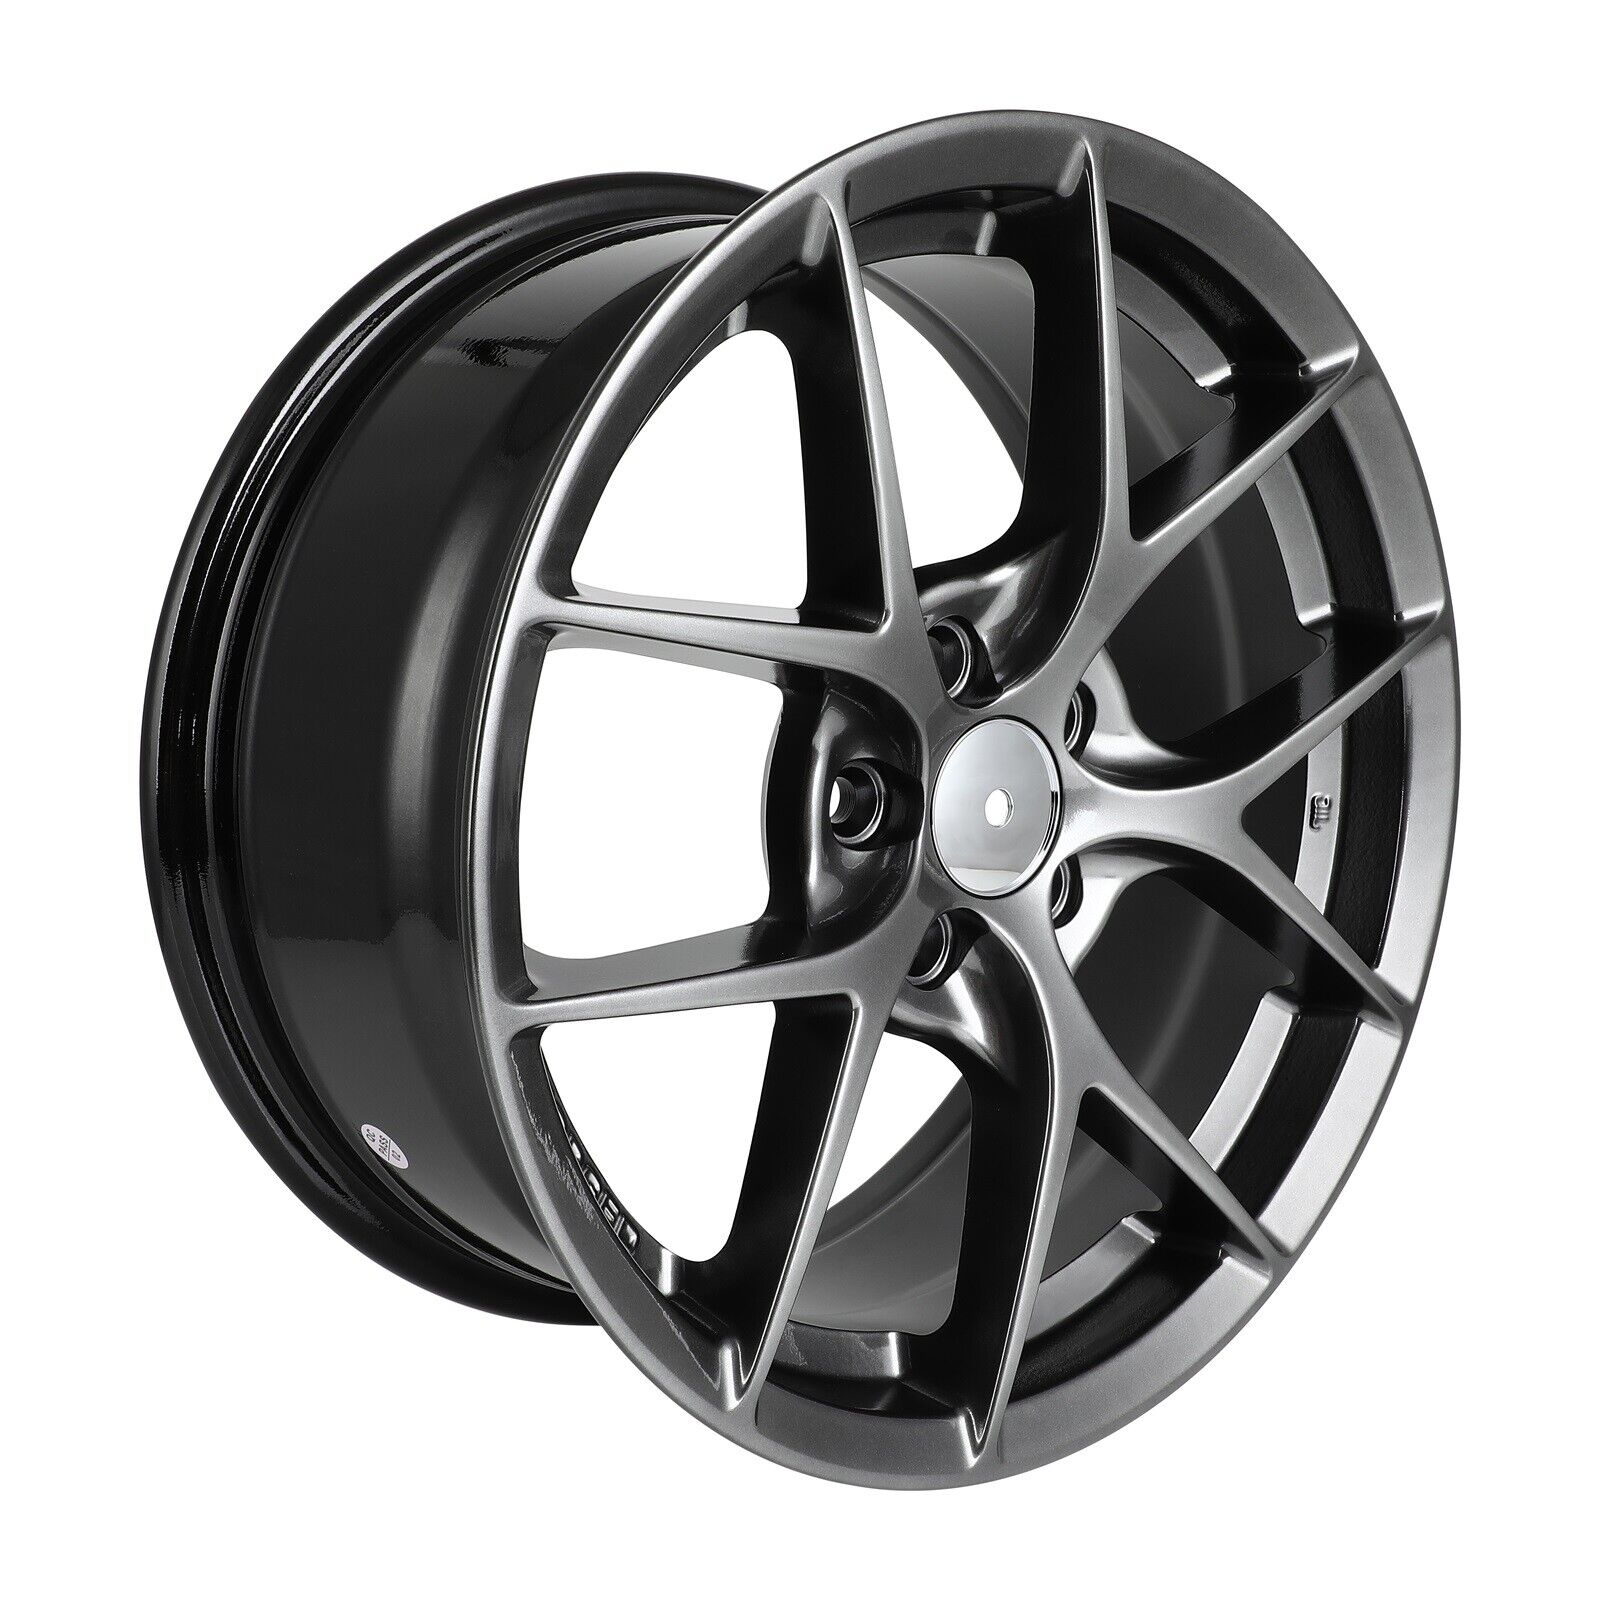 16x7 5x100 Offset +38mm Aluminum Alloy Wheels Rims For Subaru Impreza